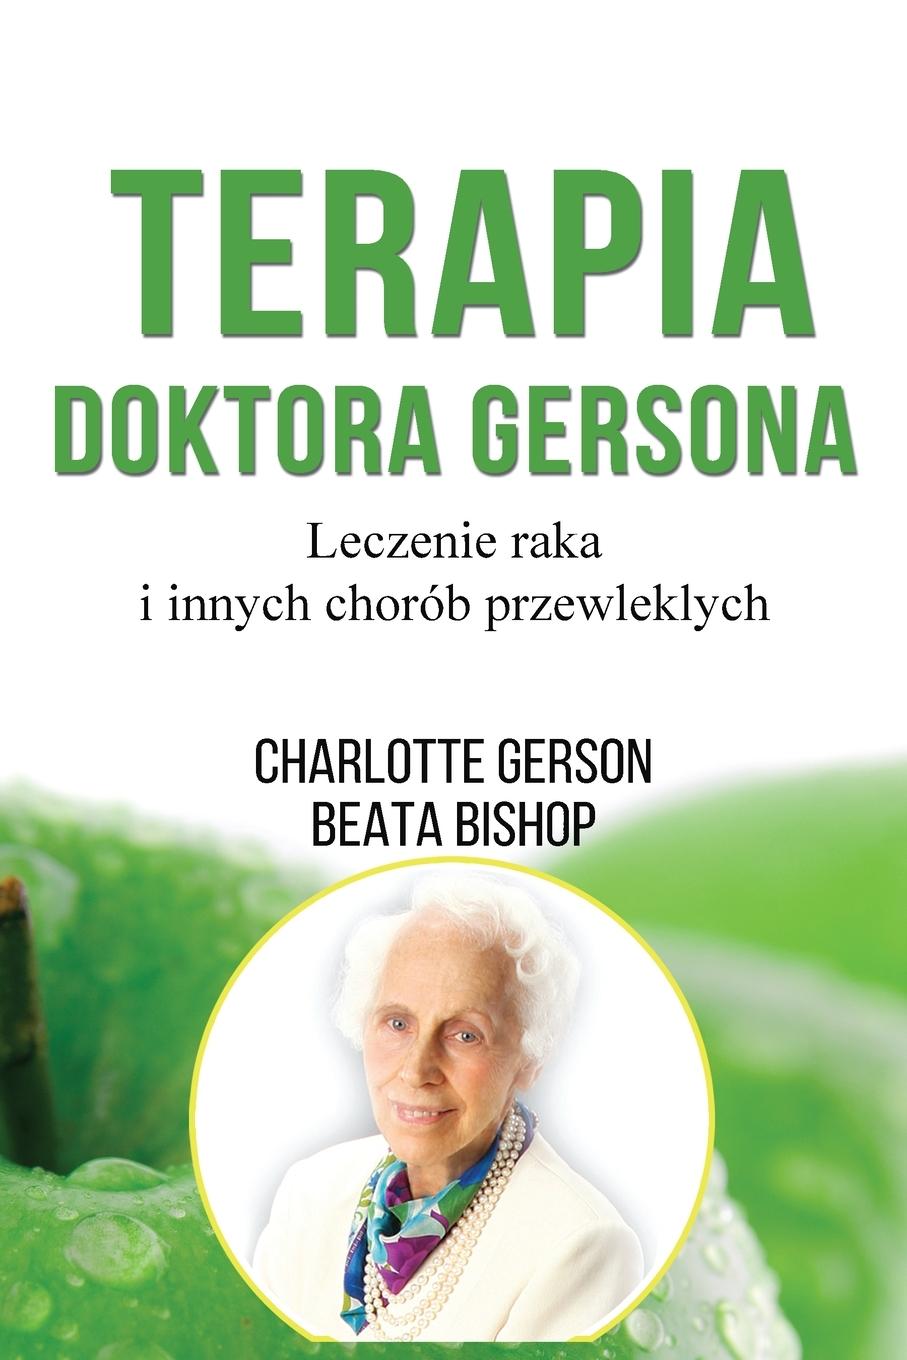 Book Terapia Doktora Gersona - Healing The Gerson Way - Polish Edition 